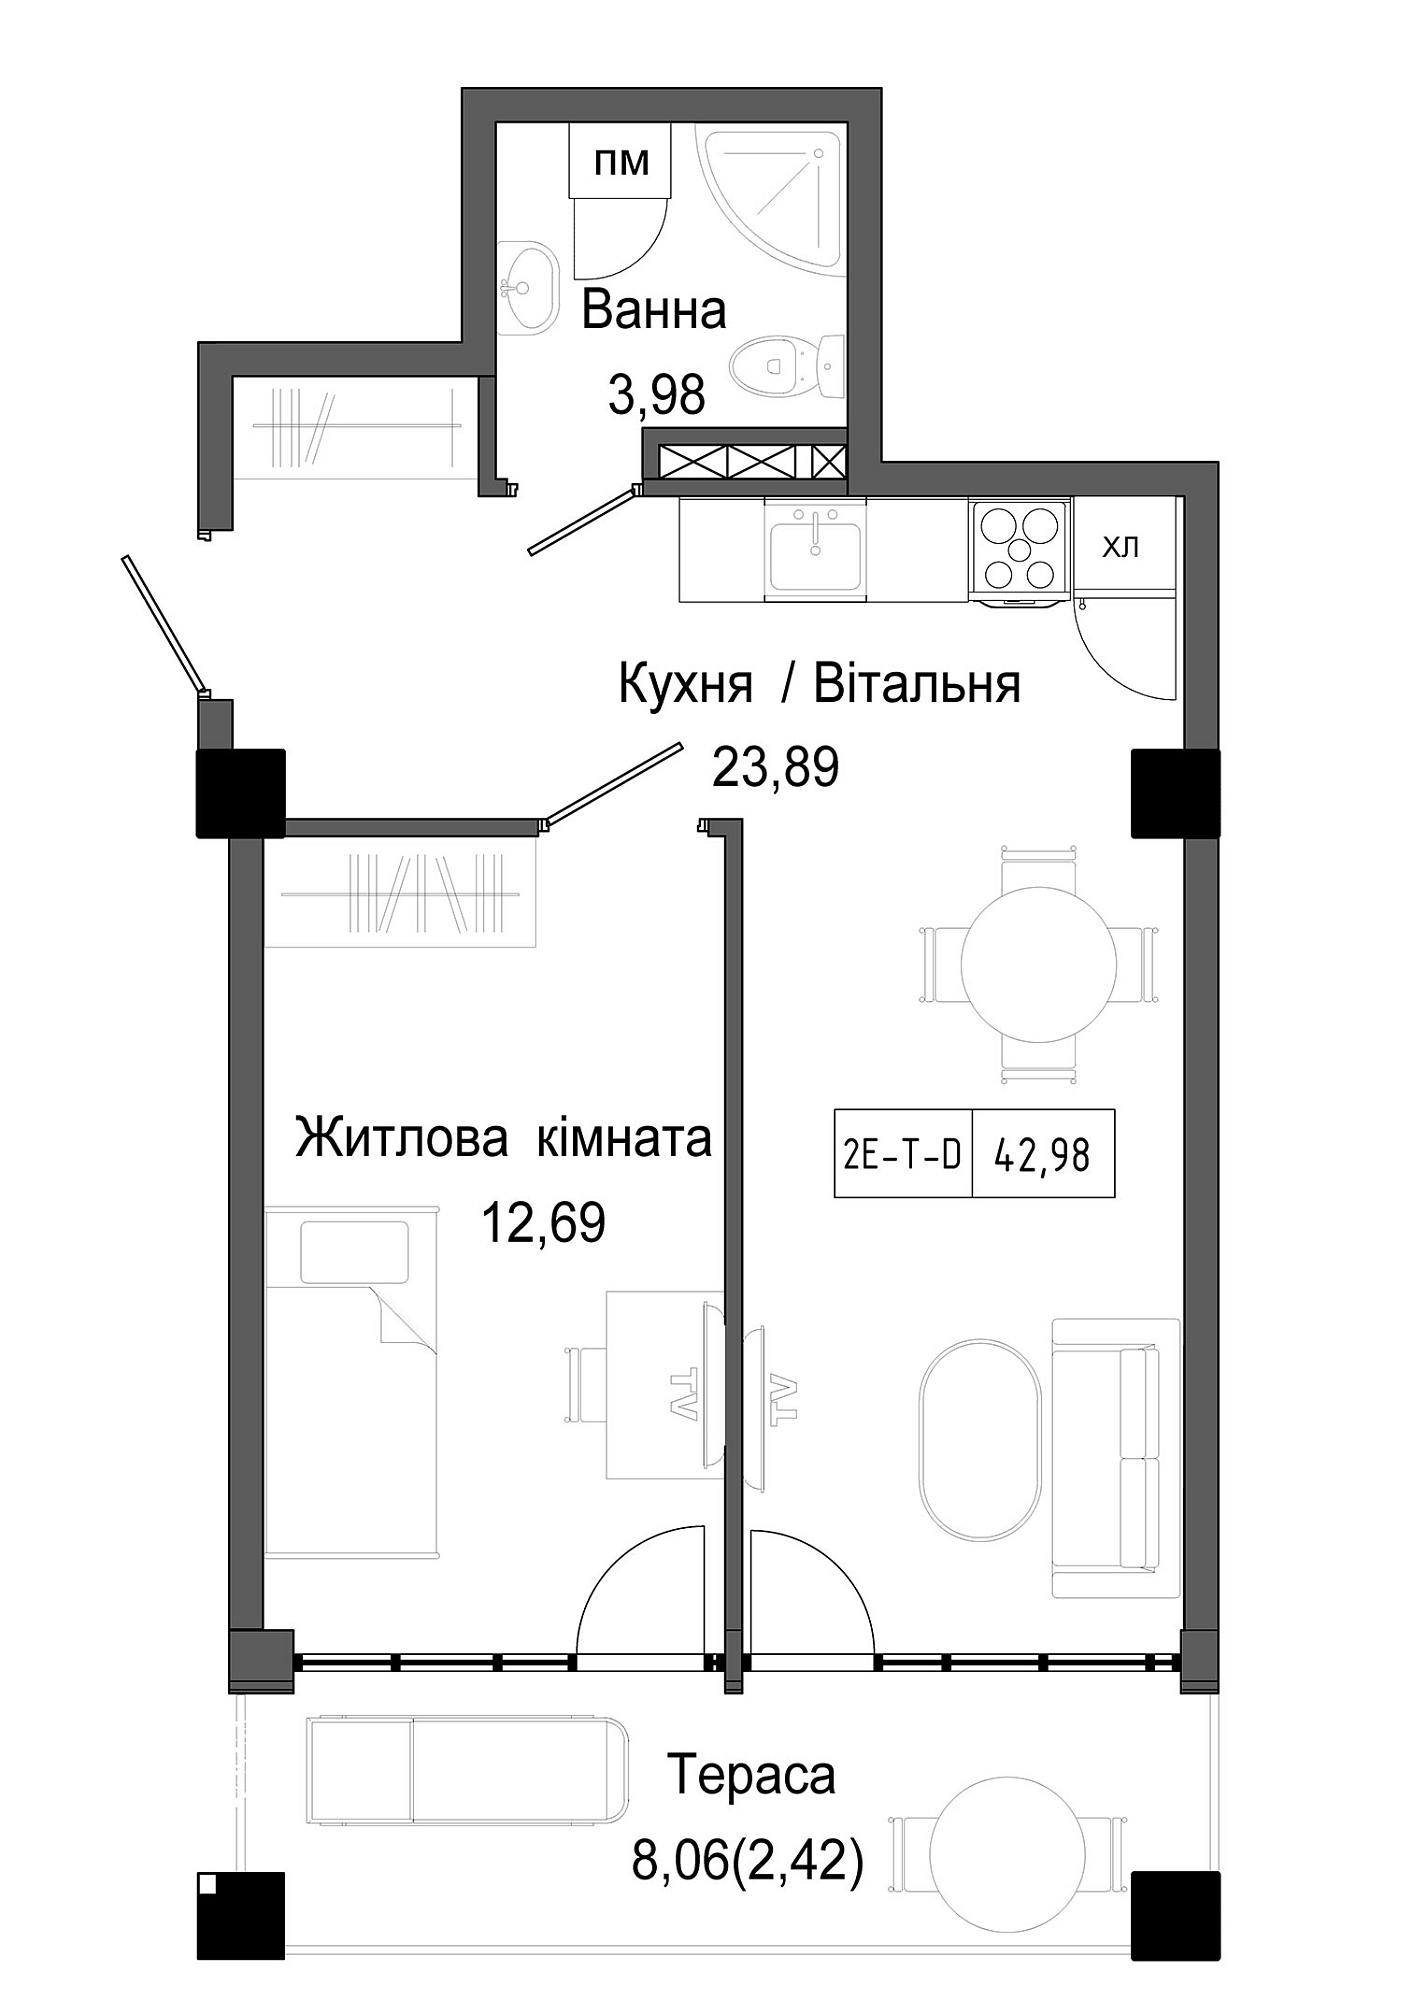 Планування 1-к квартира площею 42.98м2, UM-006-01/0006.